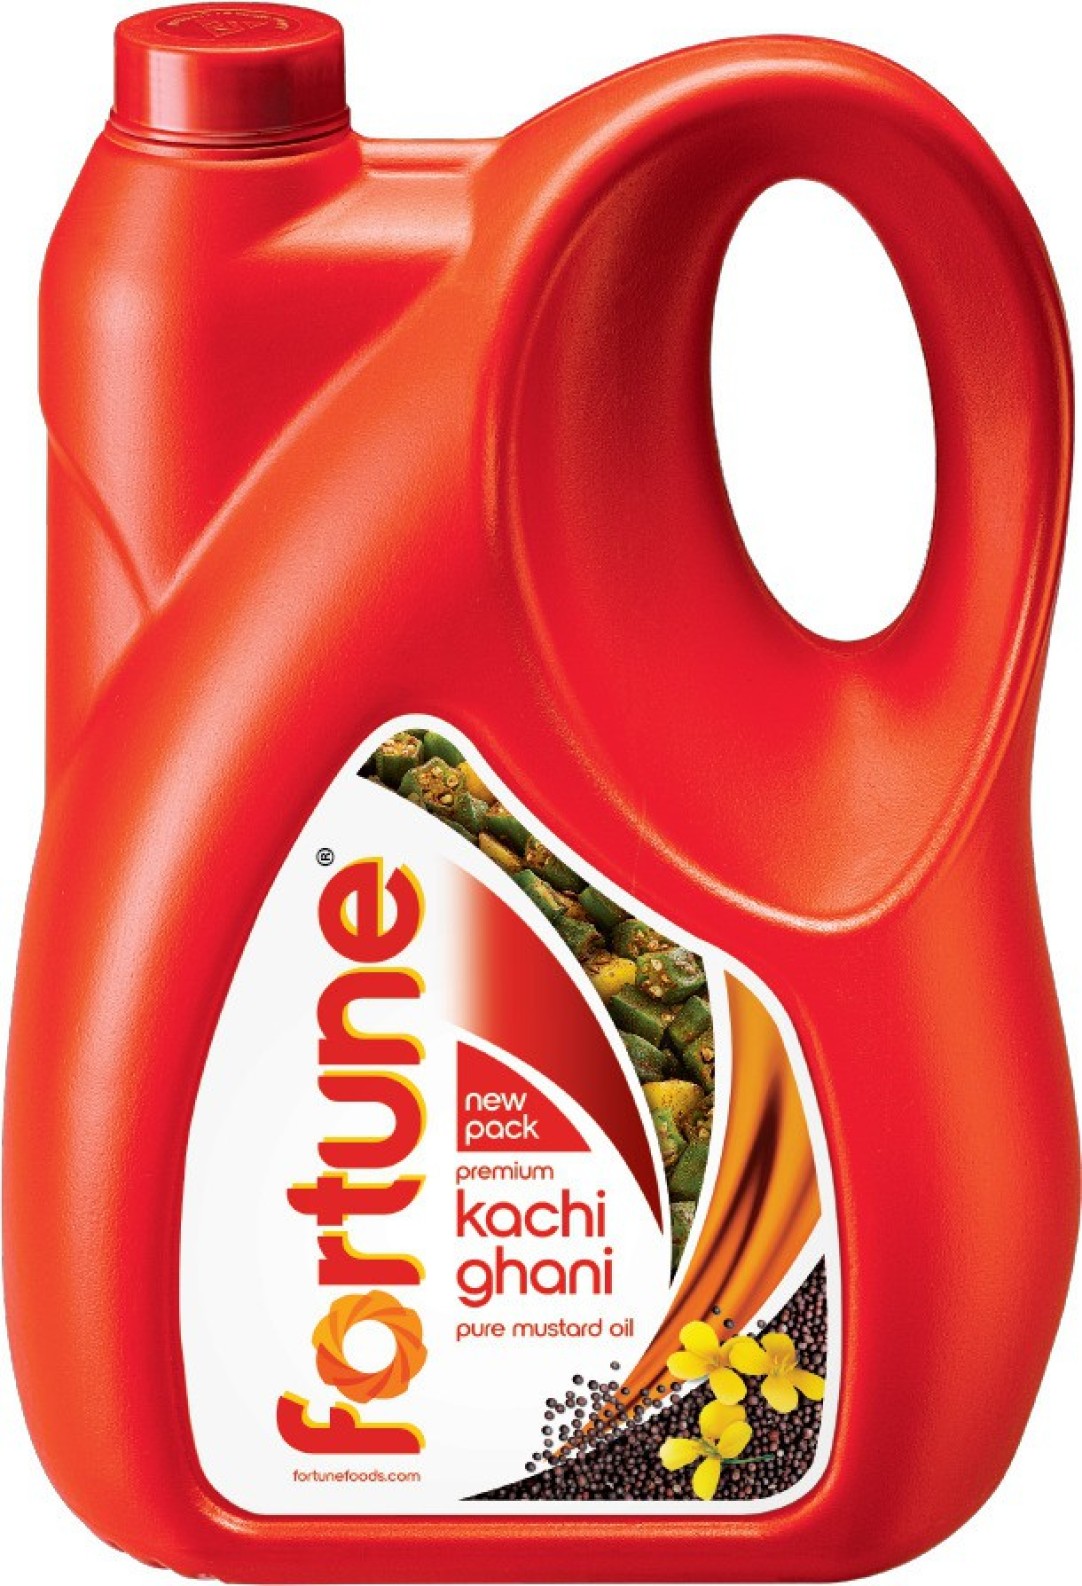 Fortune Kachi Ghani Pure Mustard Oil Can (5L)